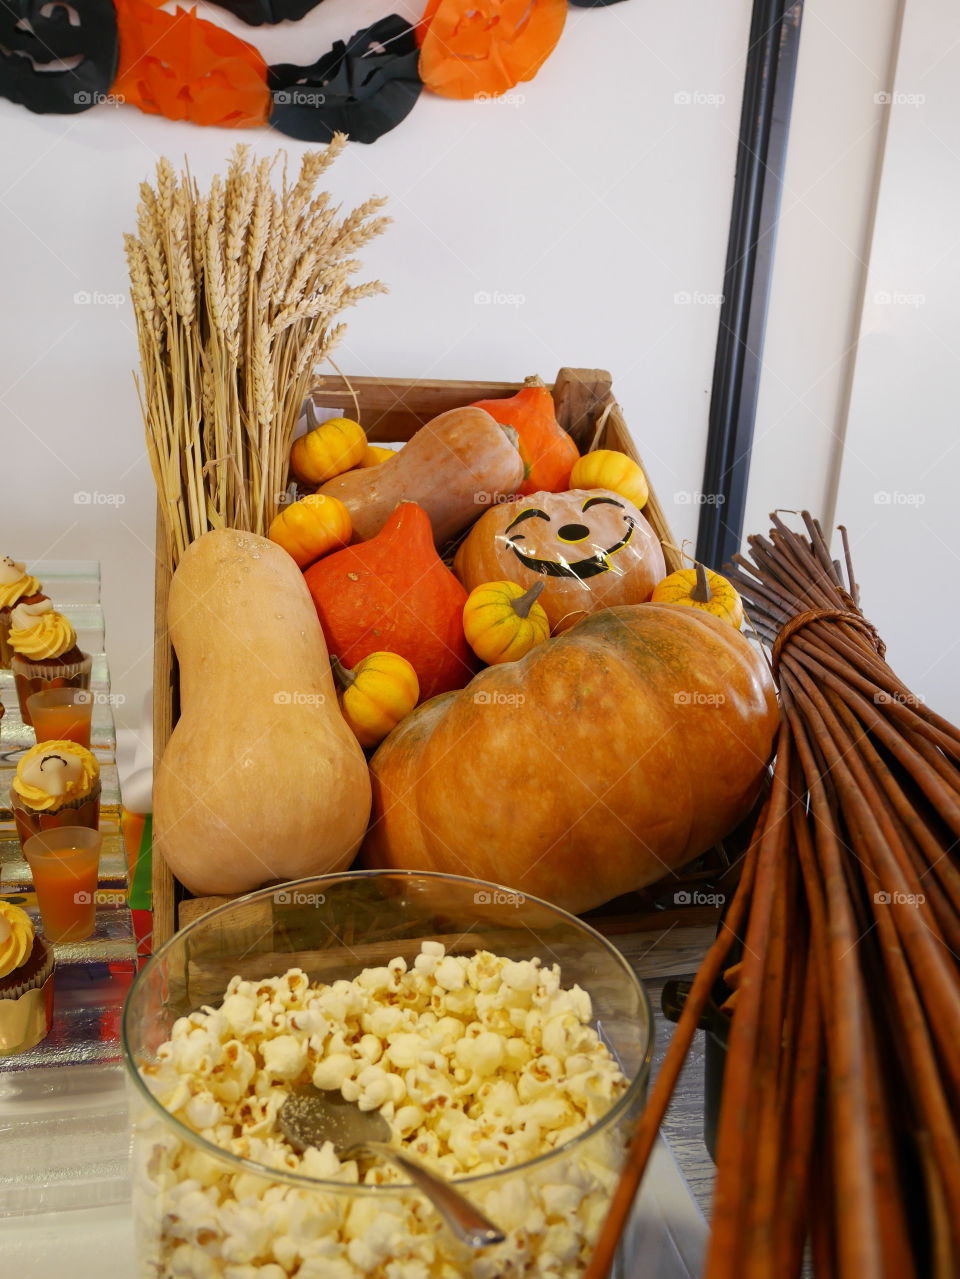 Pumpkin, halloween food
Event 